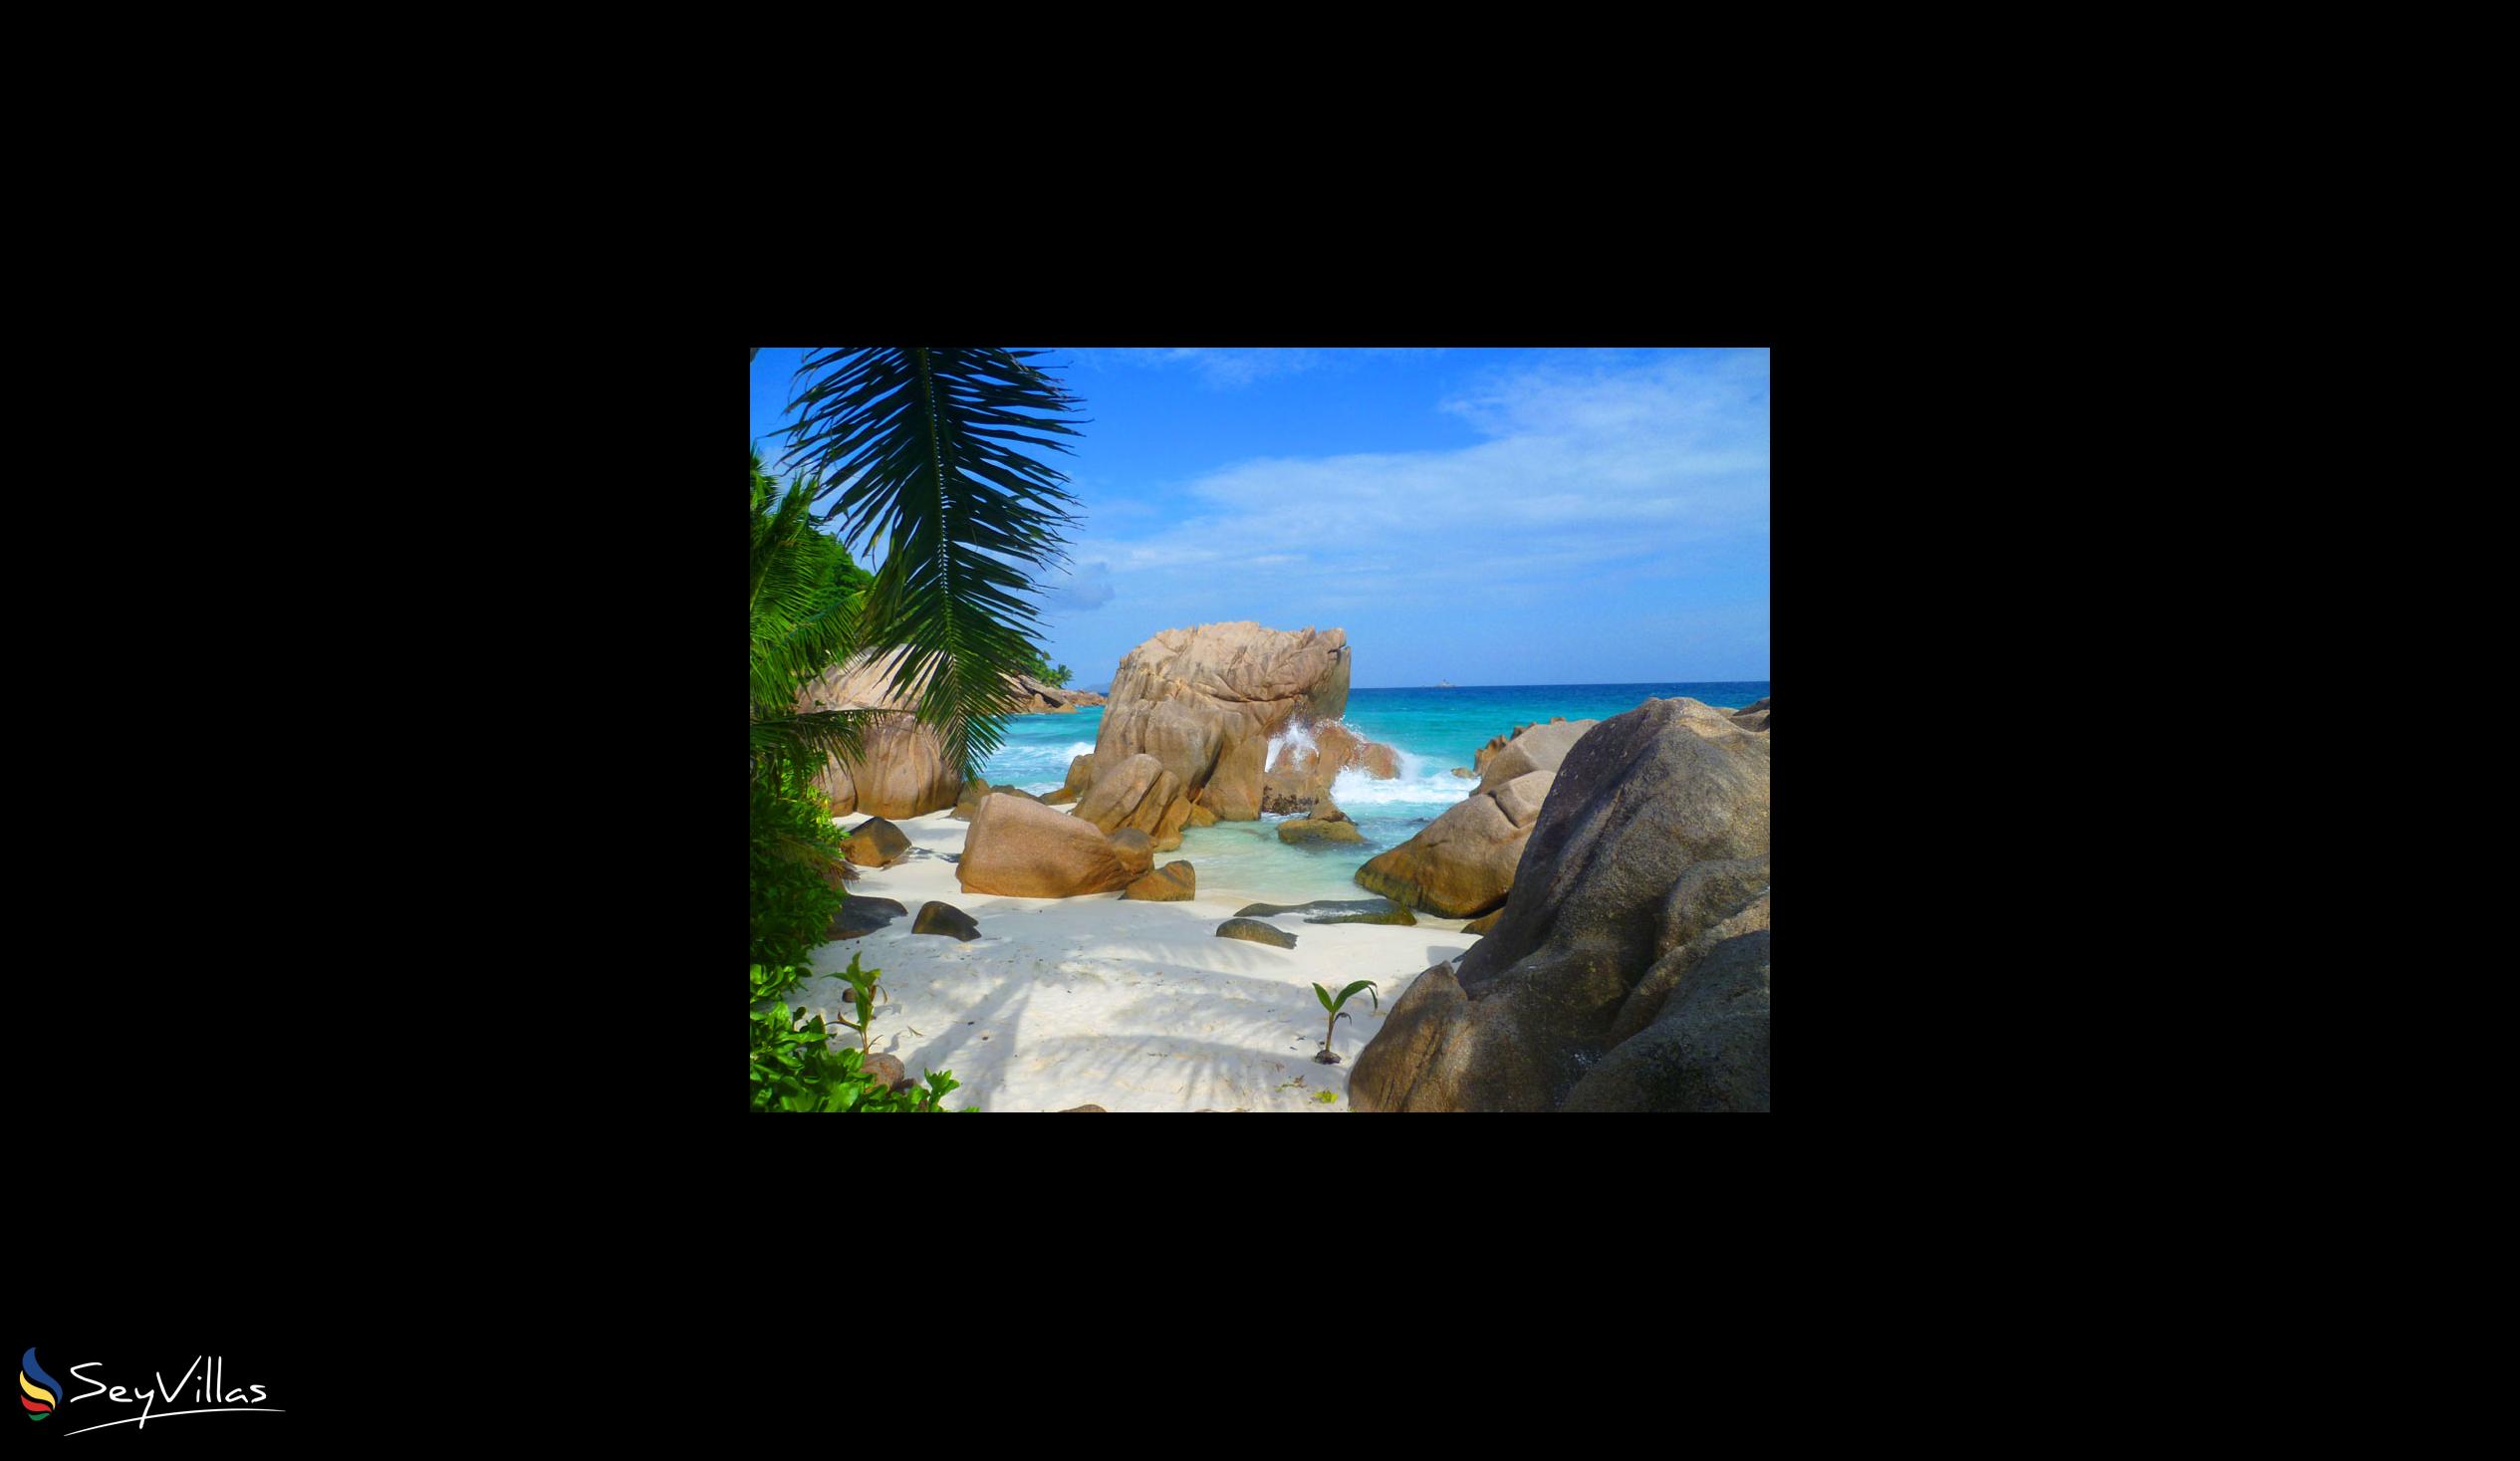 Photo 36: Le Relax Beach House - Beaches - La Digue (Seychelles)